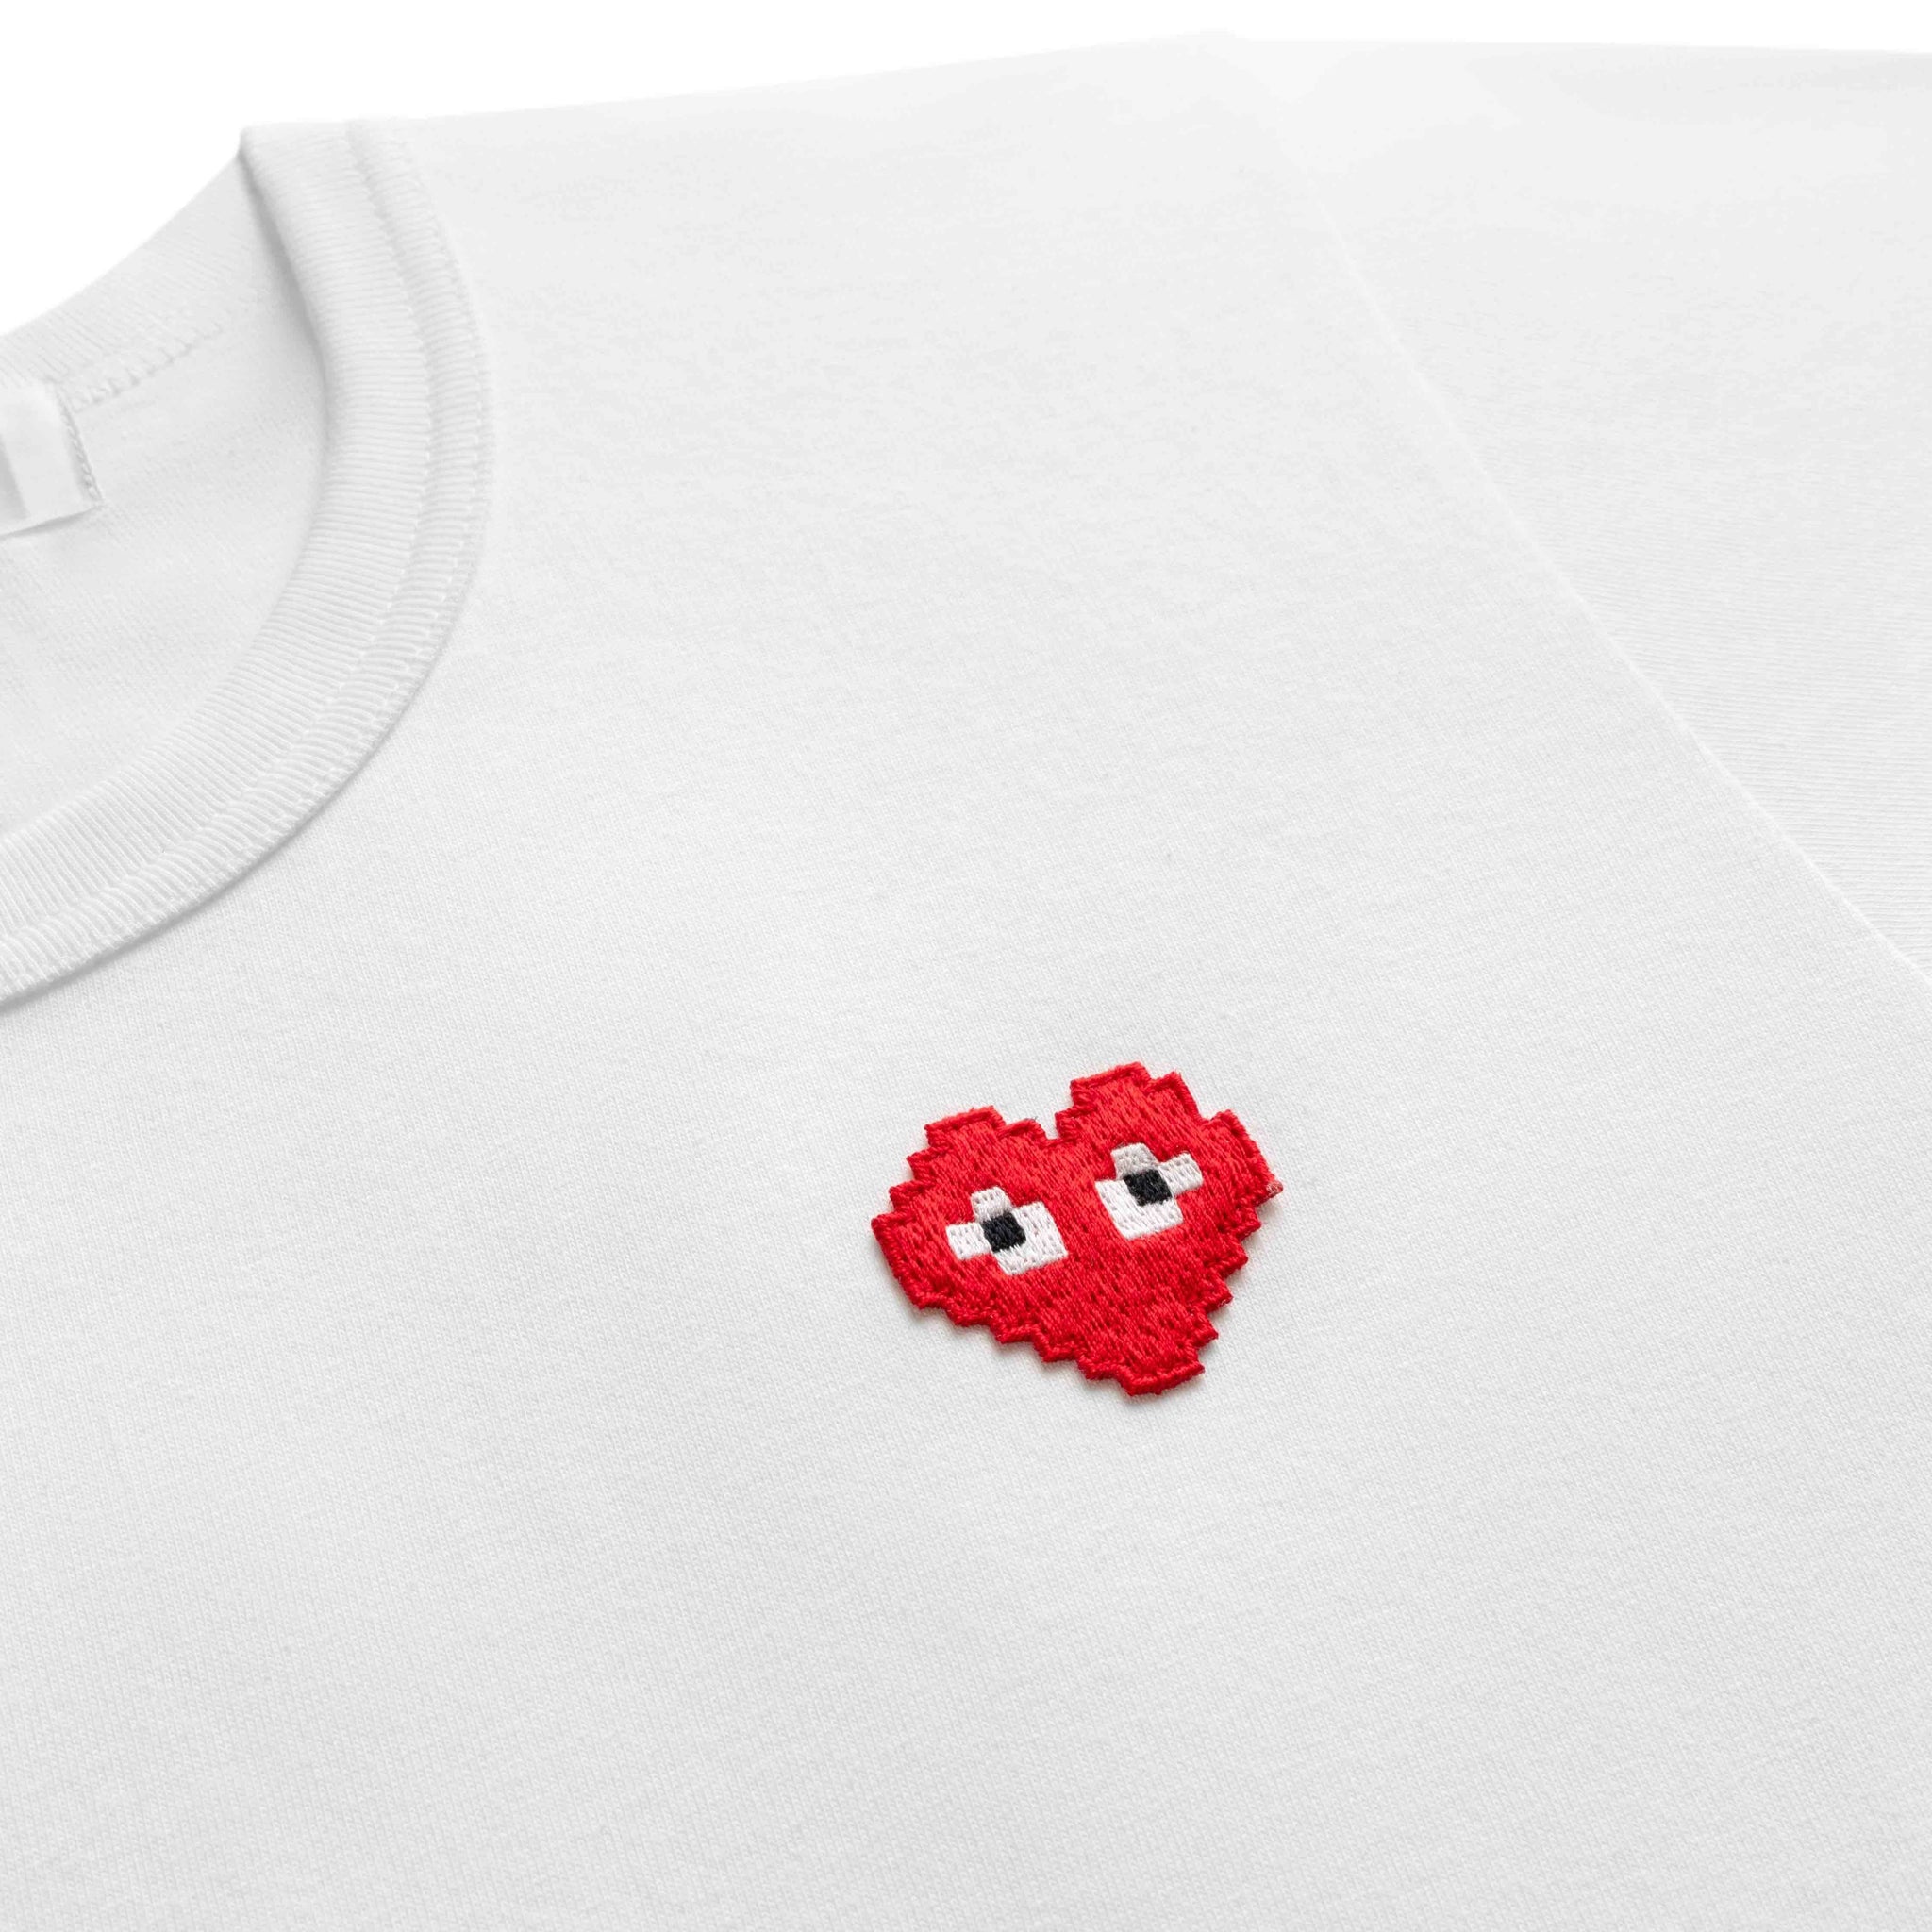 PLAY Basic Invaders T-Shirt Red Emblem (White)